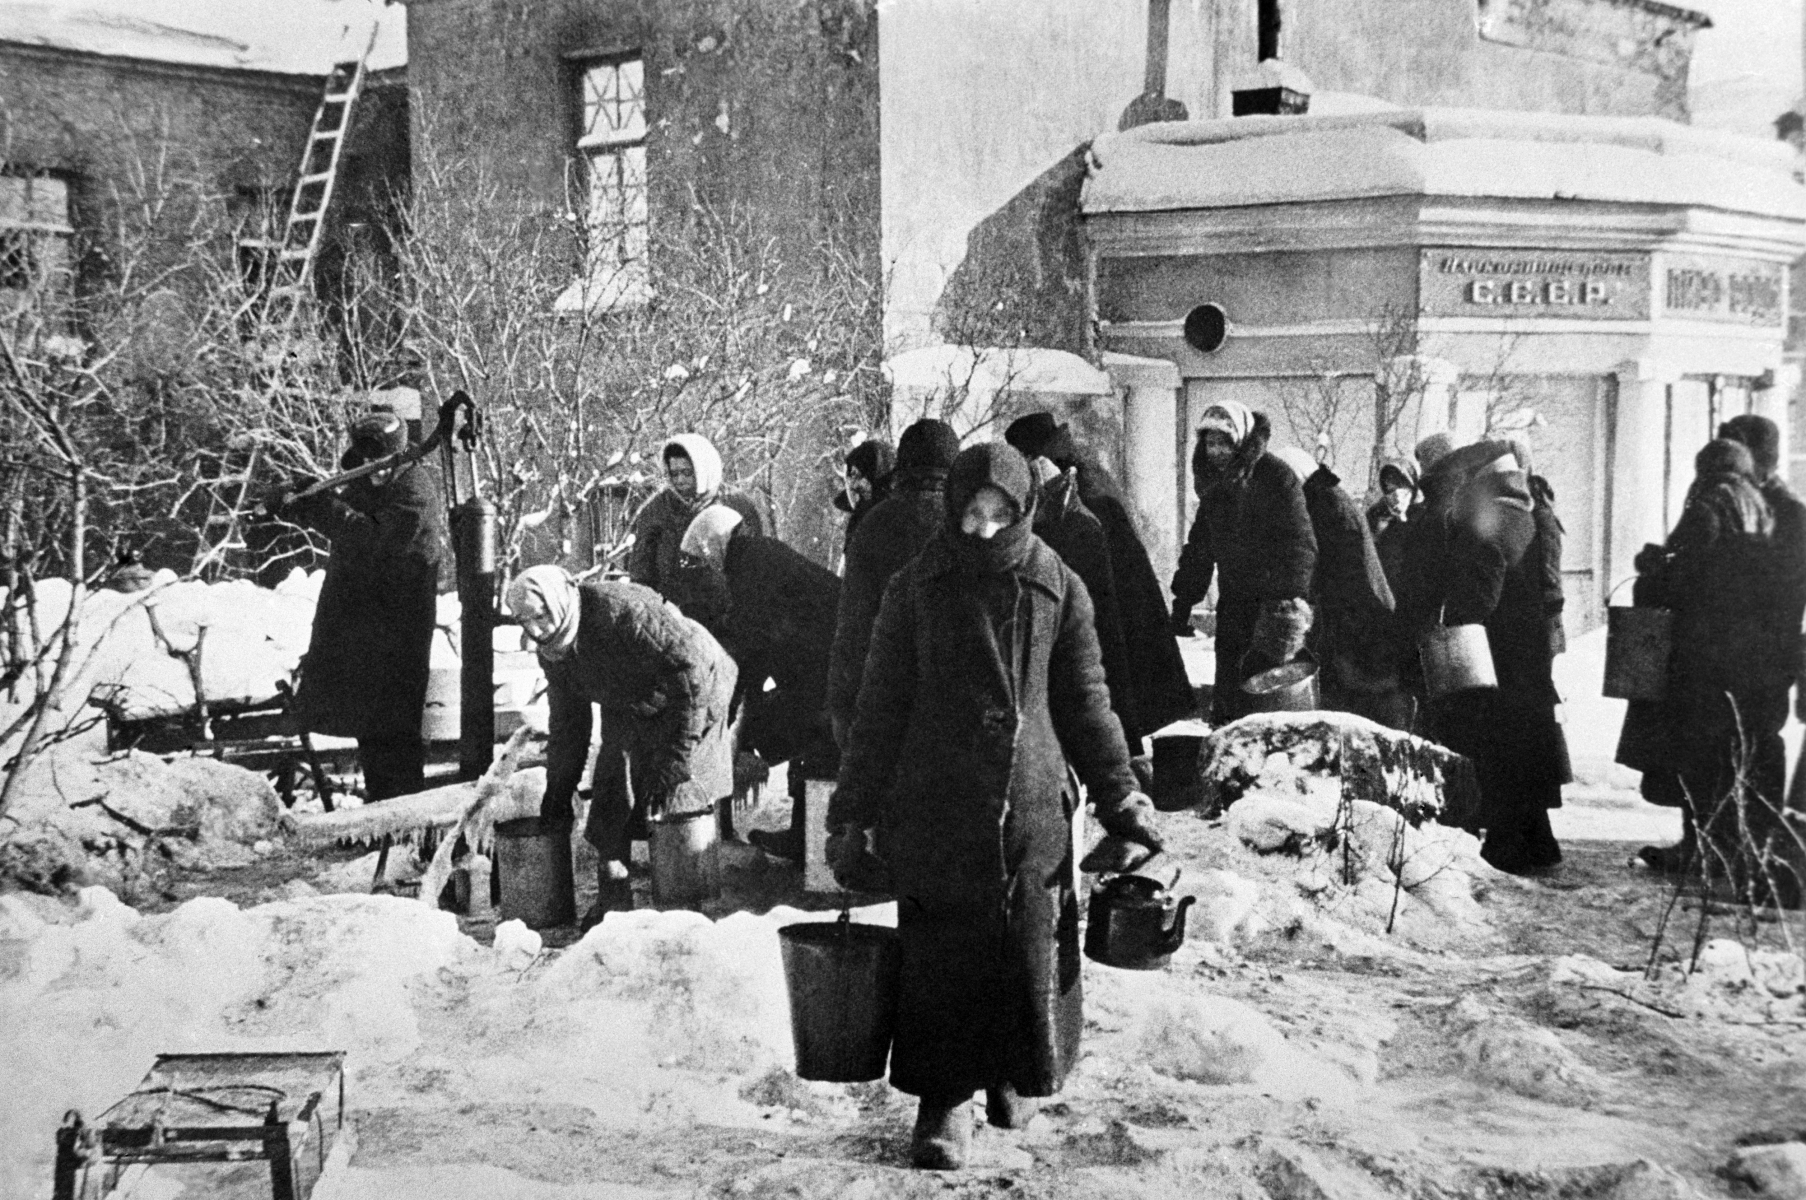 Время начала блокады ленинграда